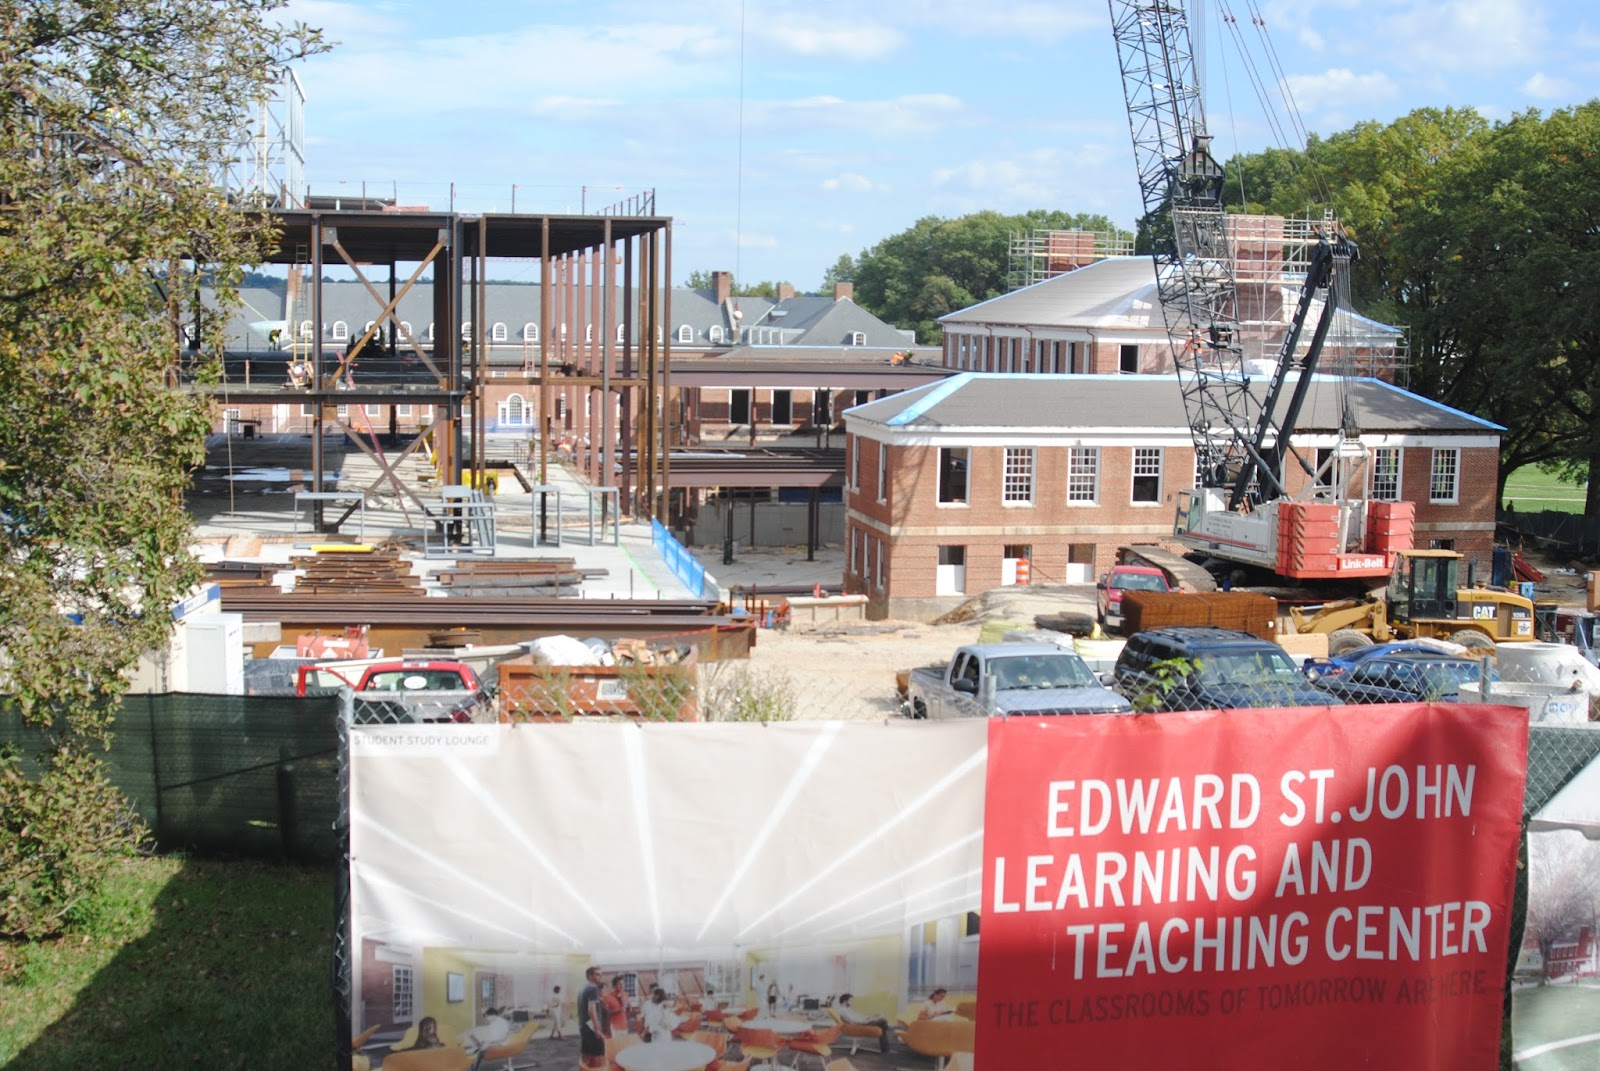 Edward St. John Learning and Teaching Center image 1++